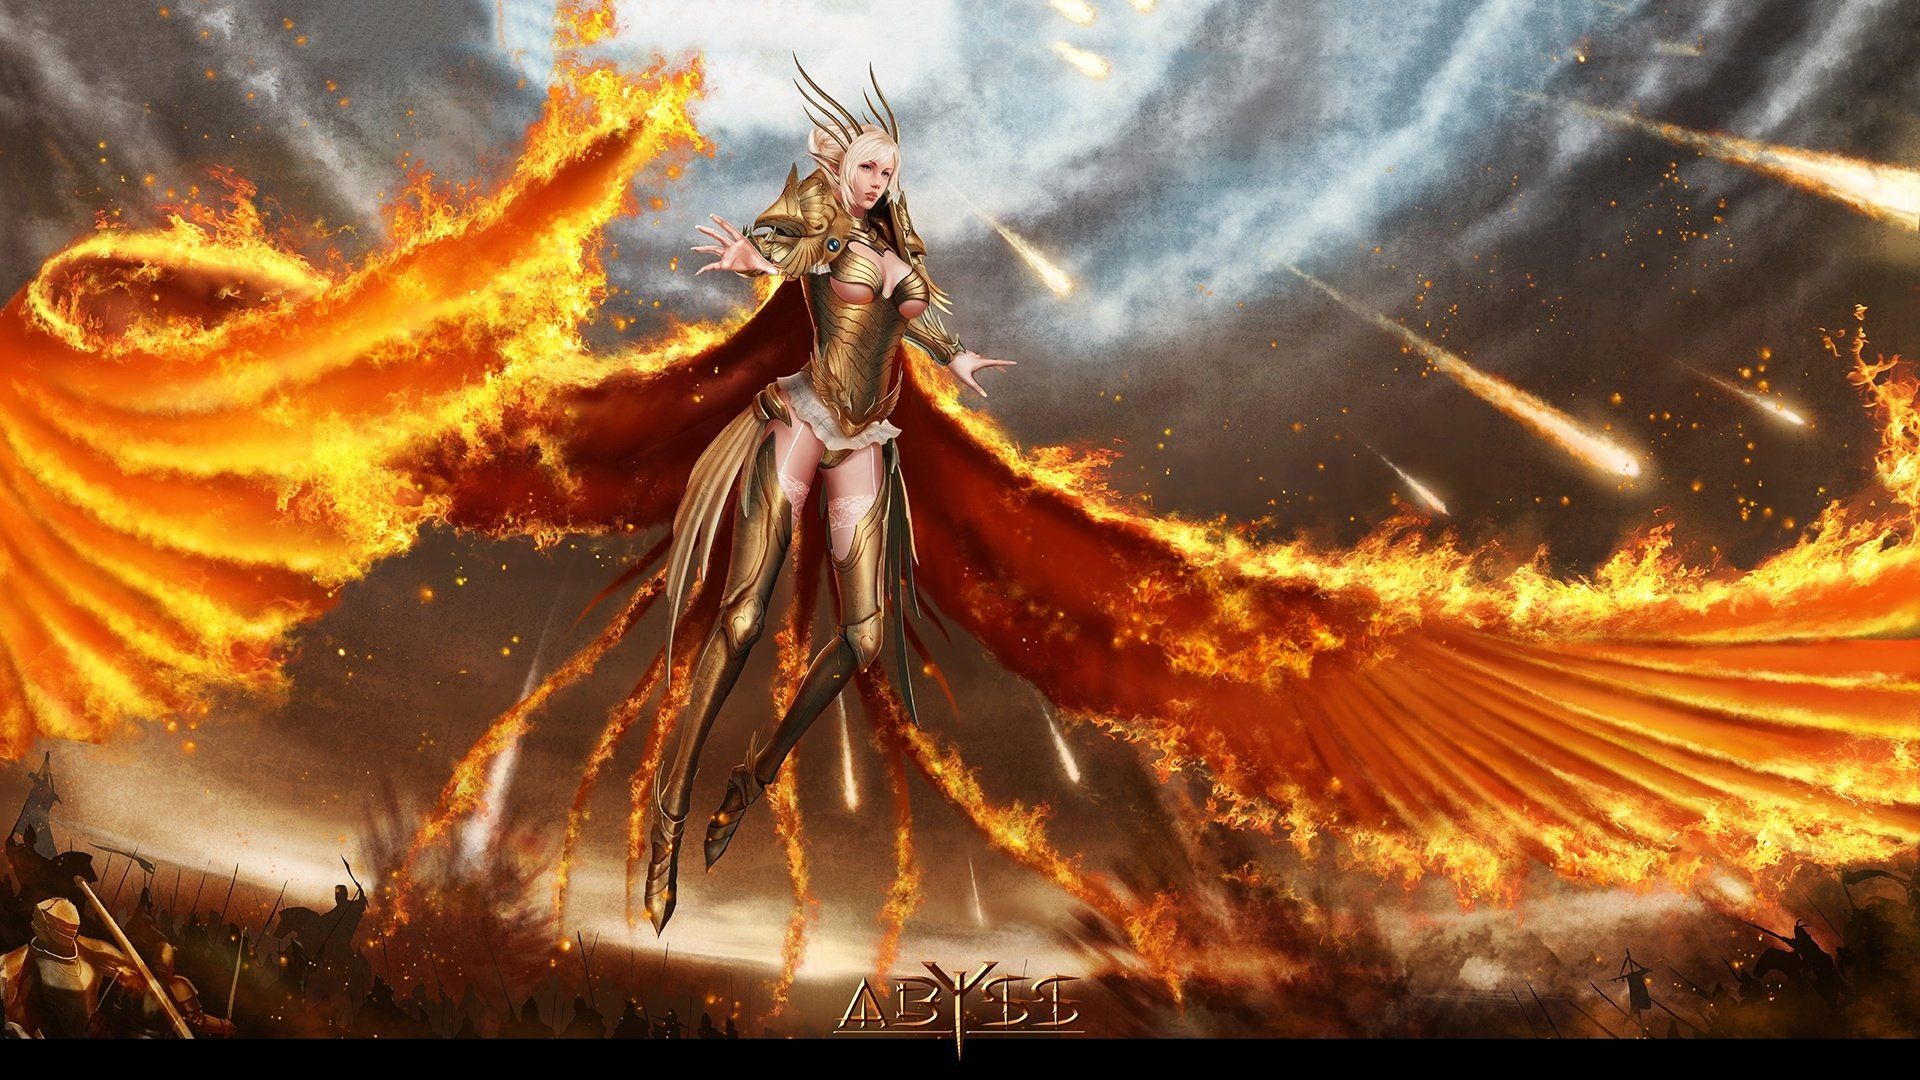 Wings of Fire Wallpaper: Image, Art Category